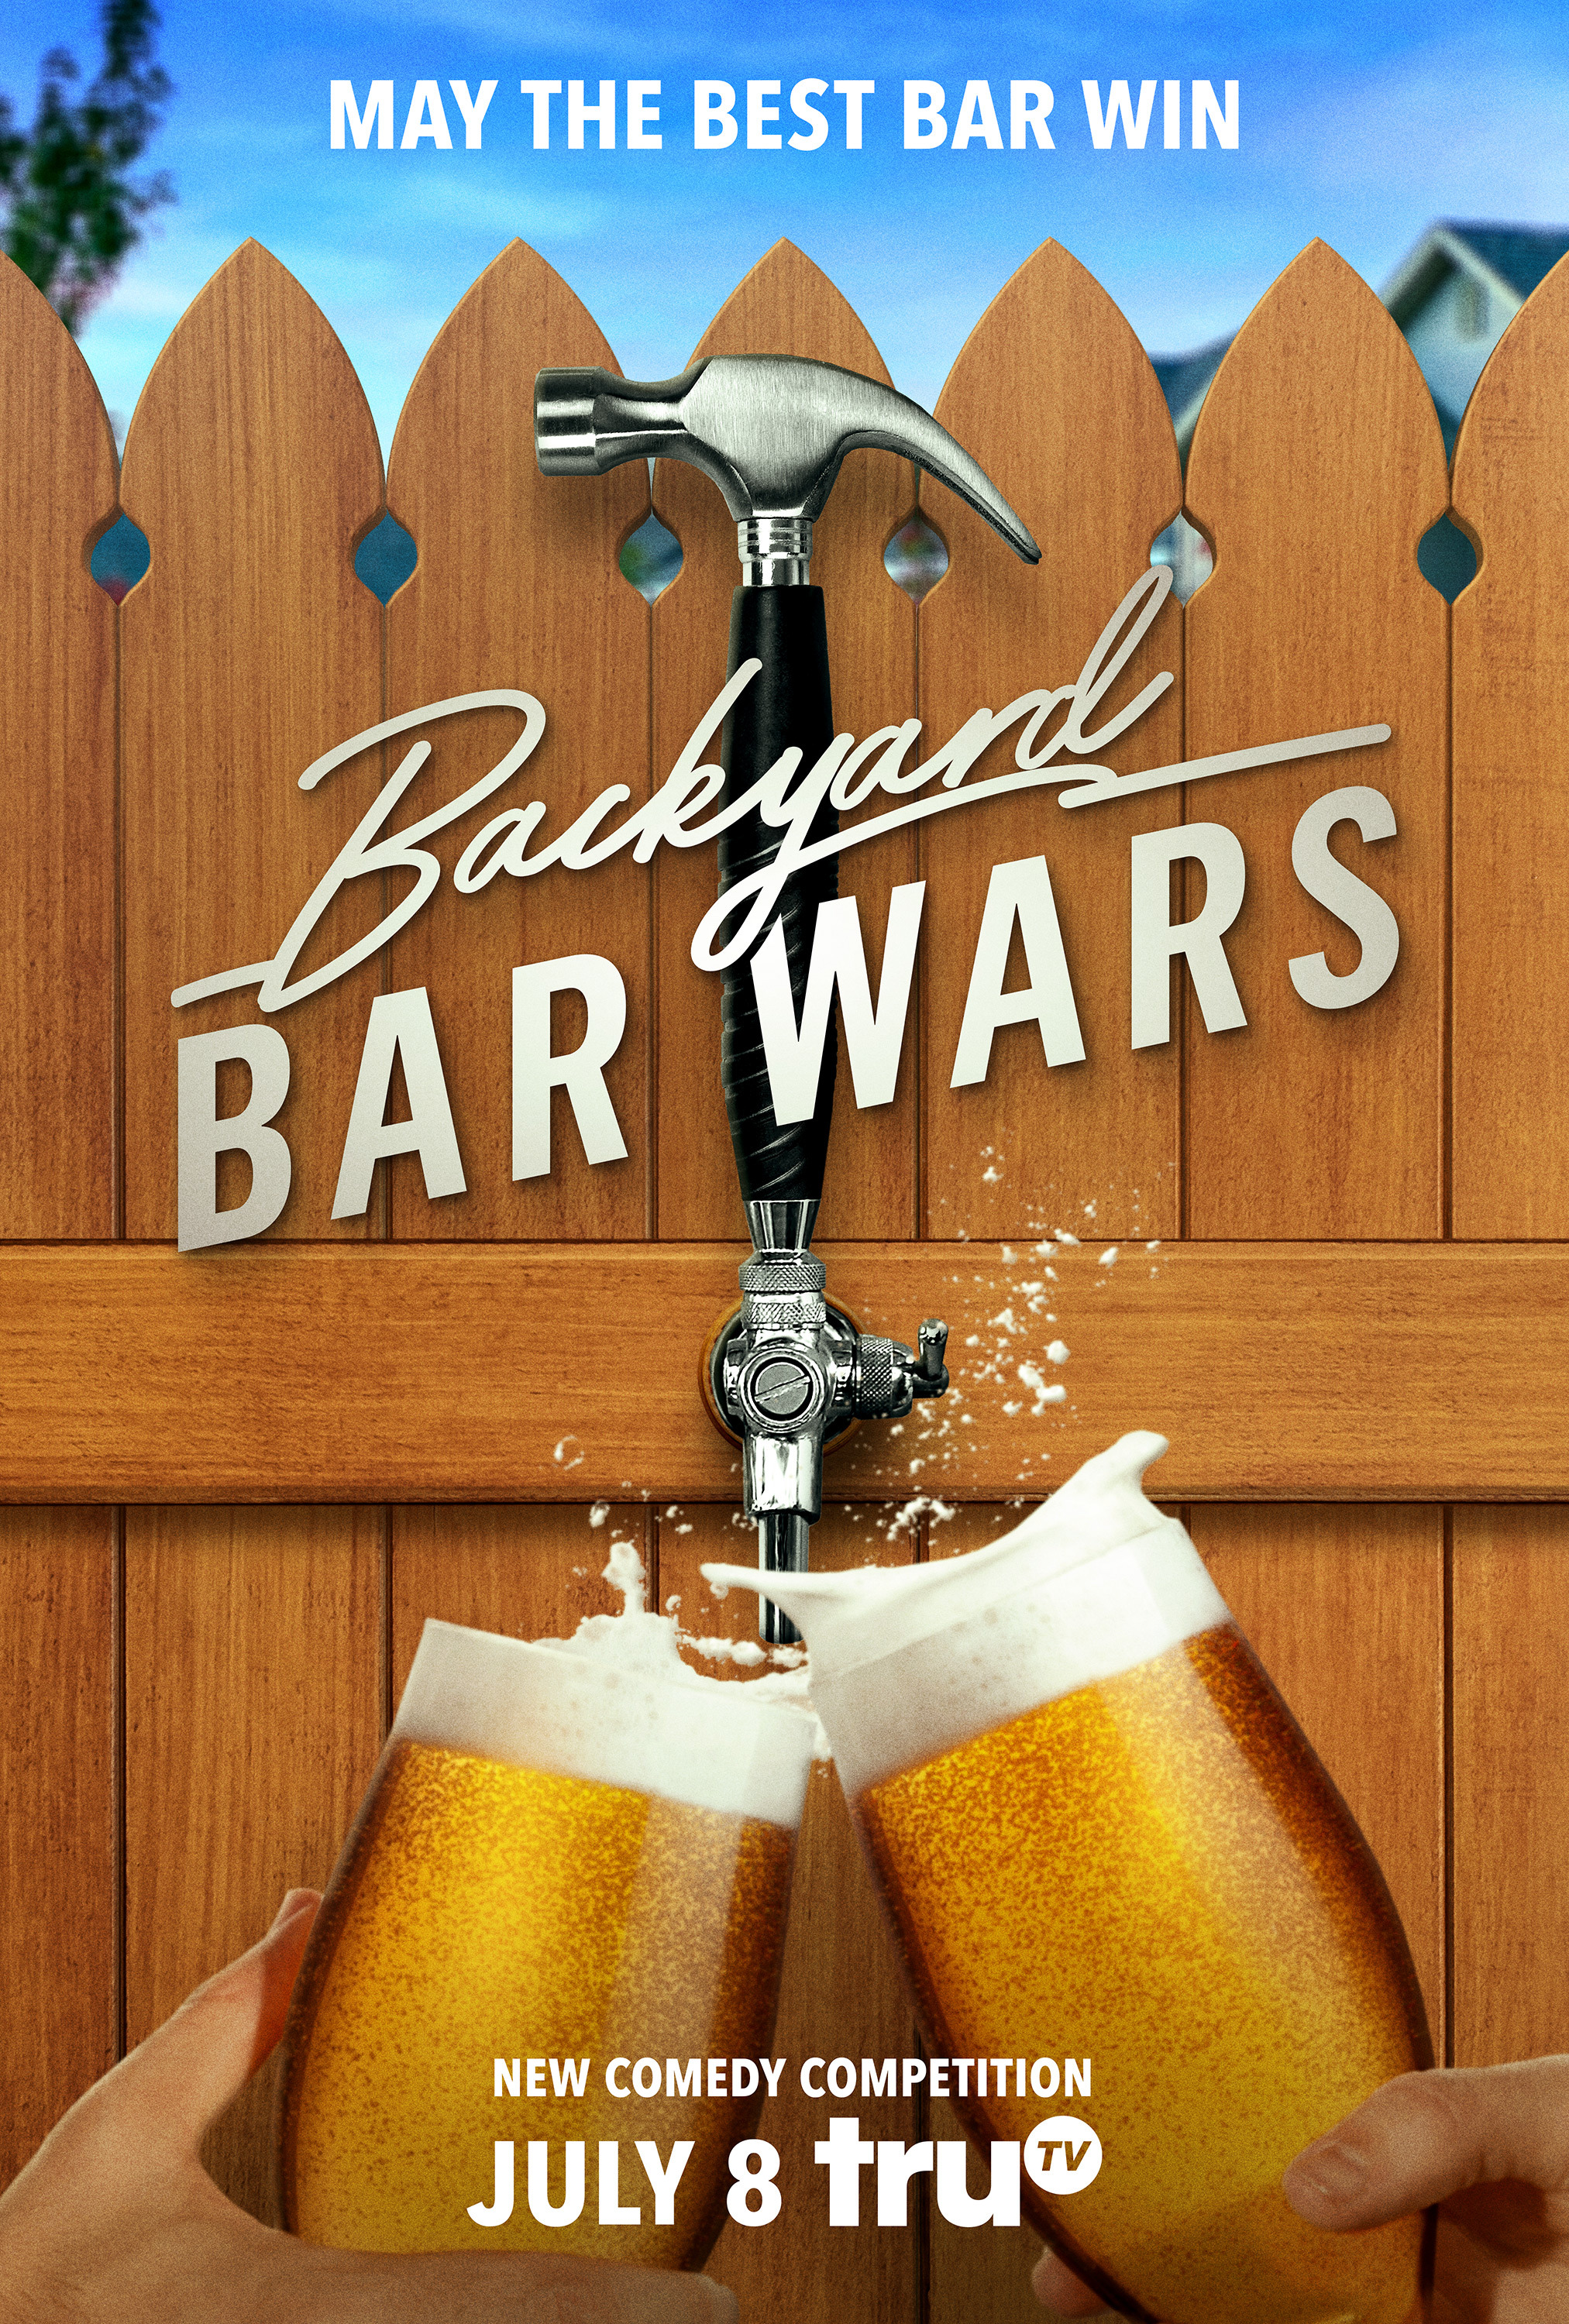 Mega Sized TV Poster Image for Backyard Bar Wars 